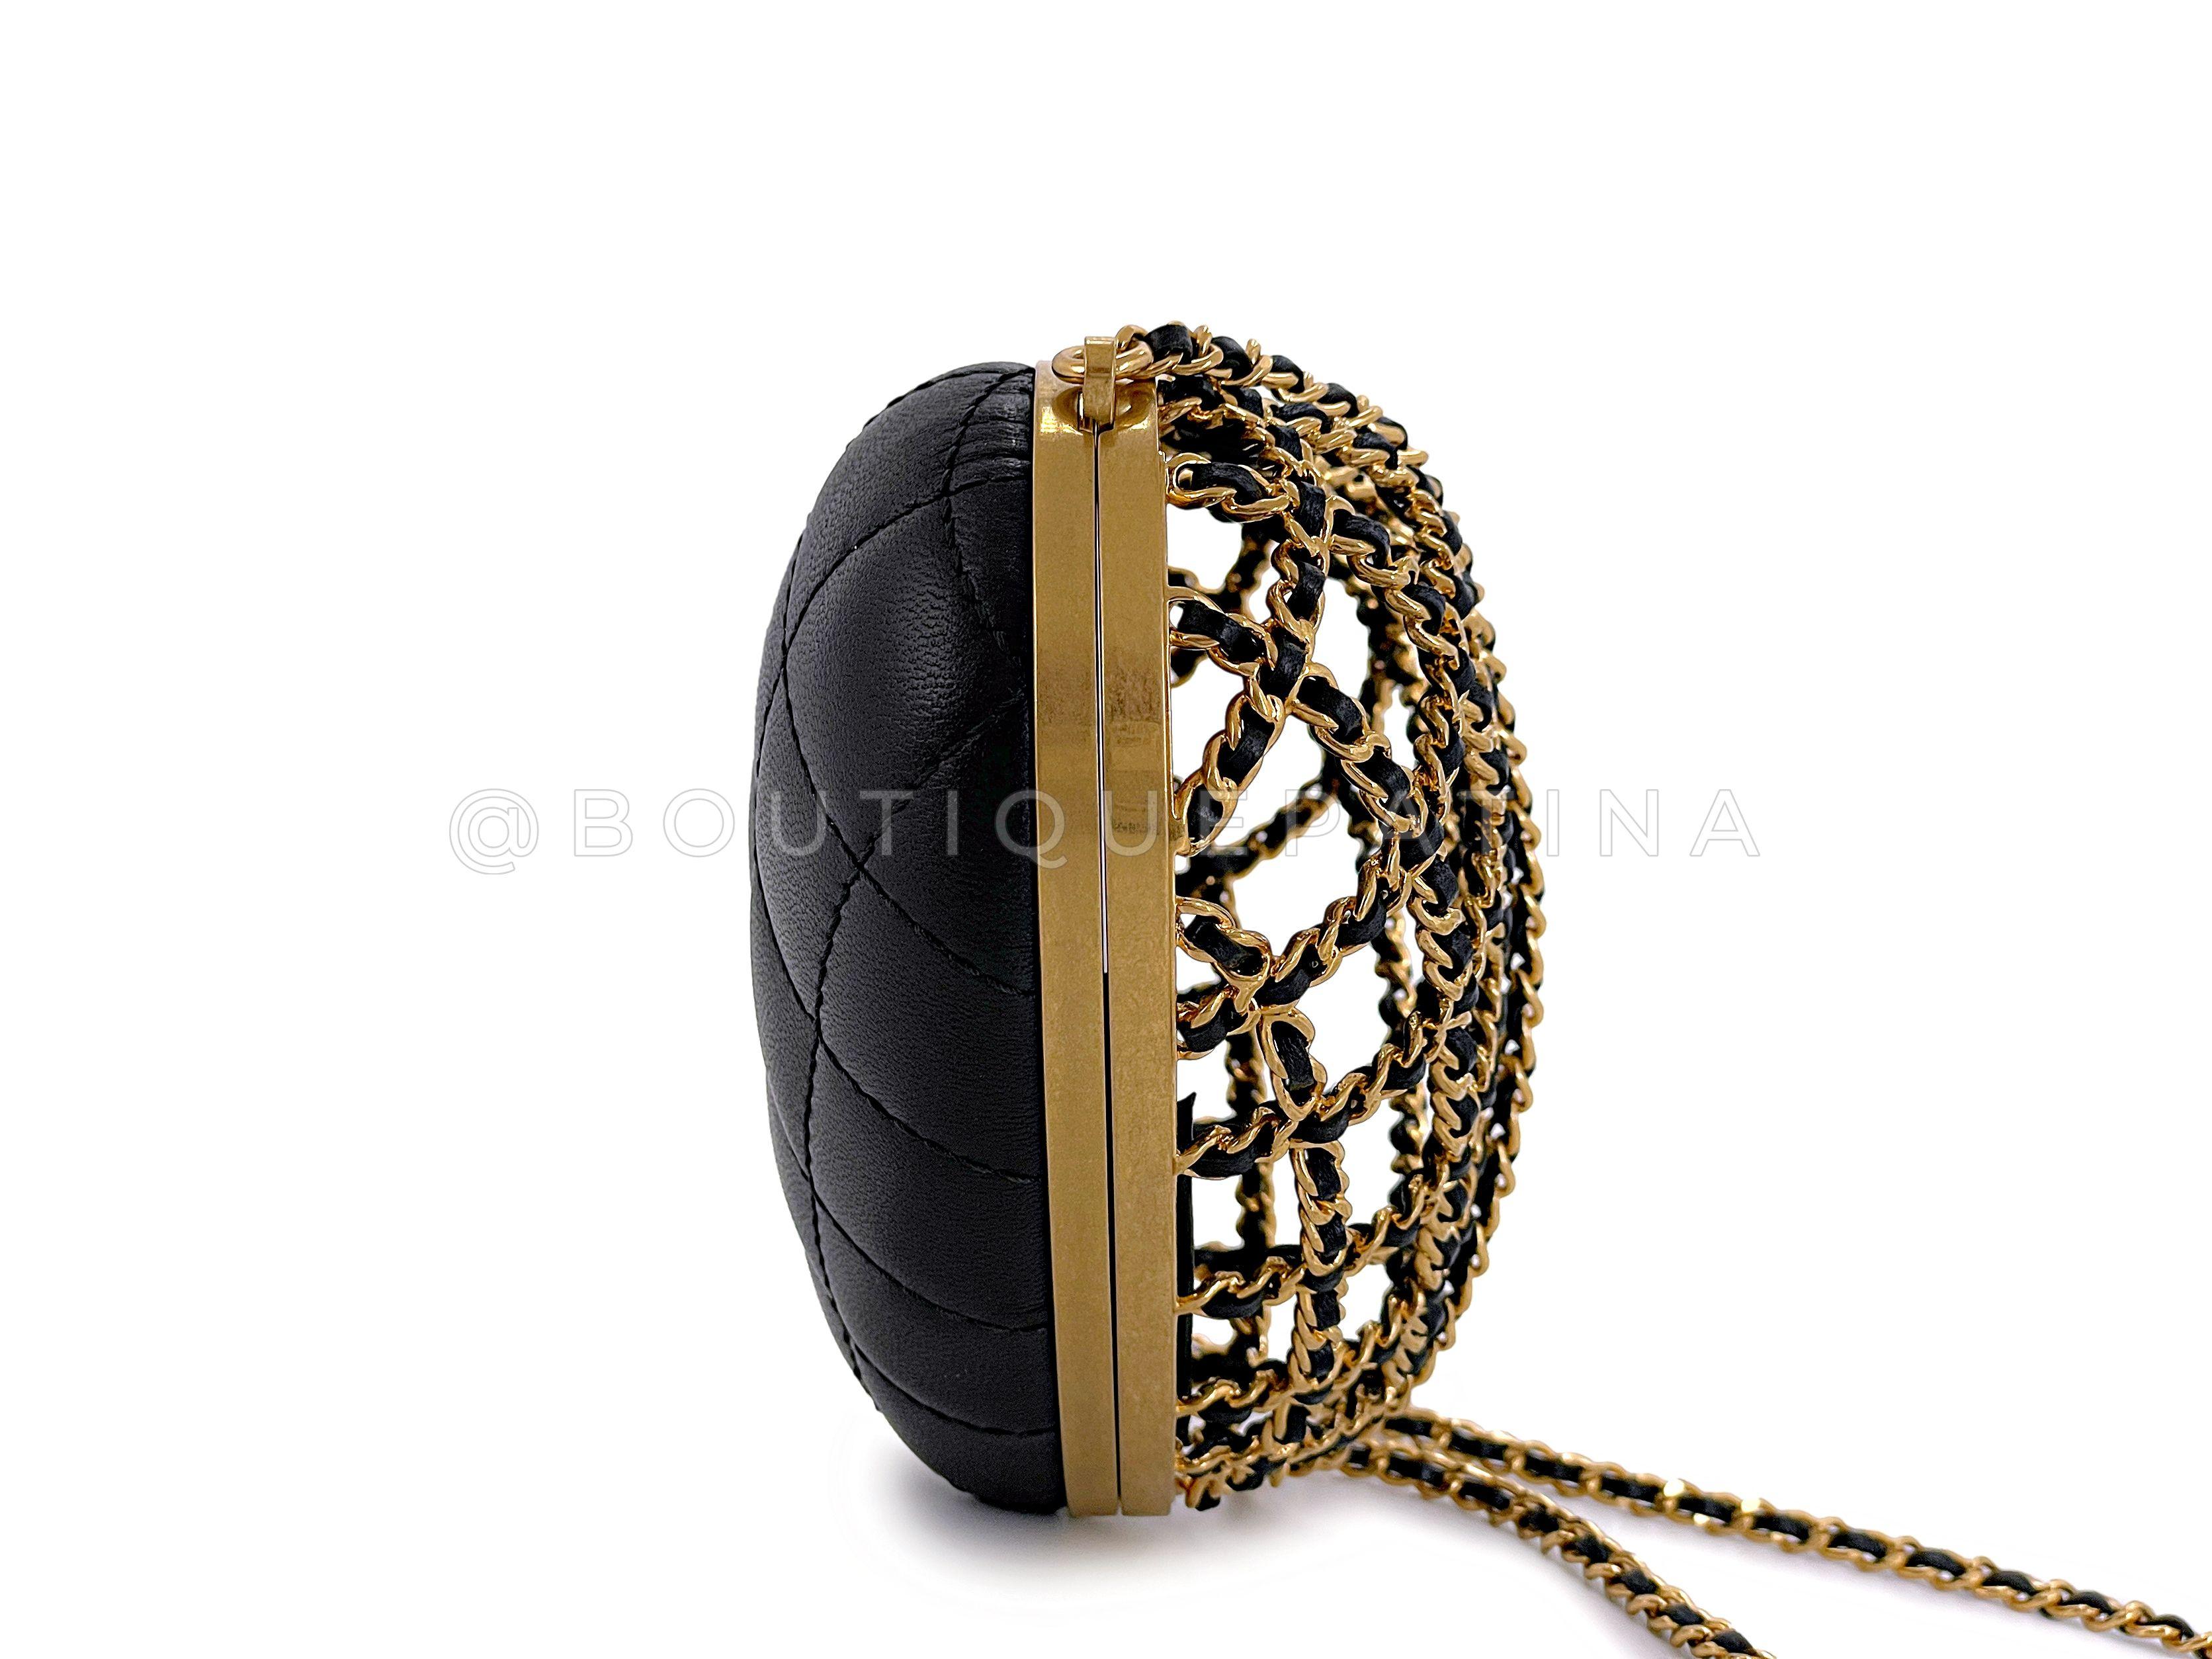 NIB 23S Chanel Caged Heart Minaudière Evening Clutch Bag Gold Black 67194 Neuf - En vente à Costa Mesa, CA